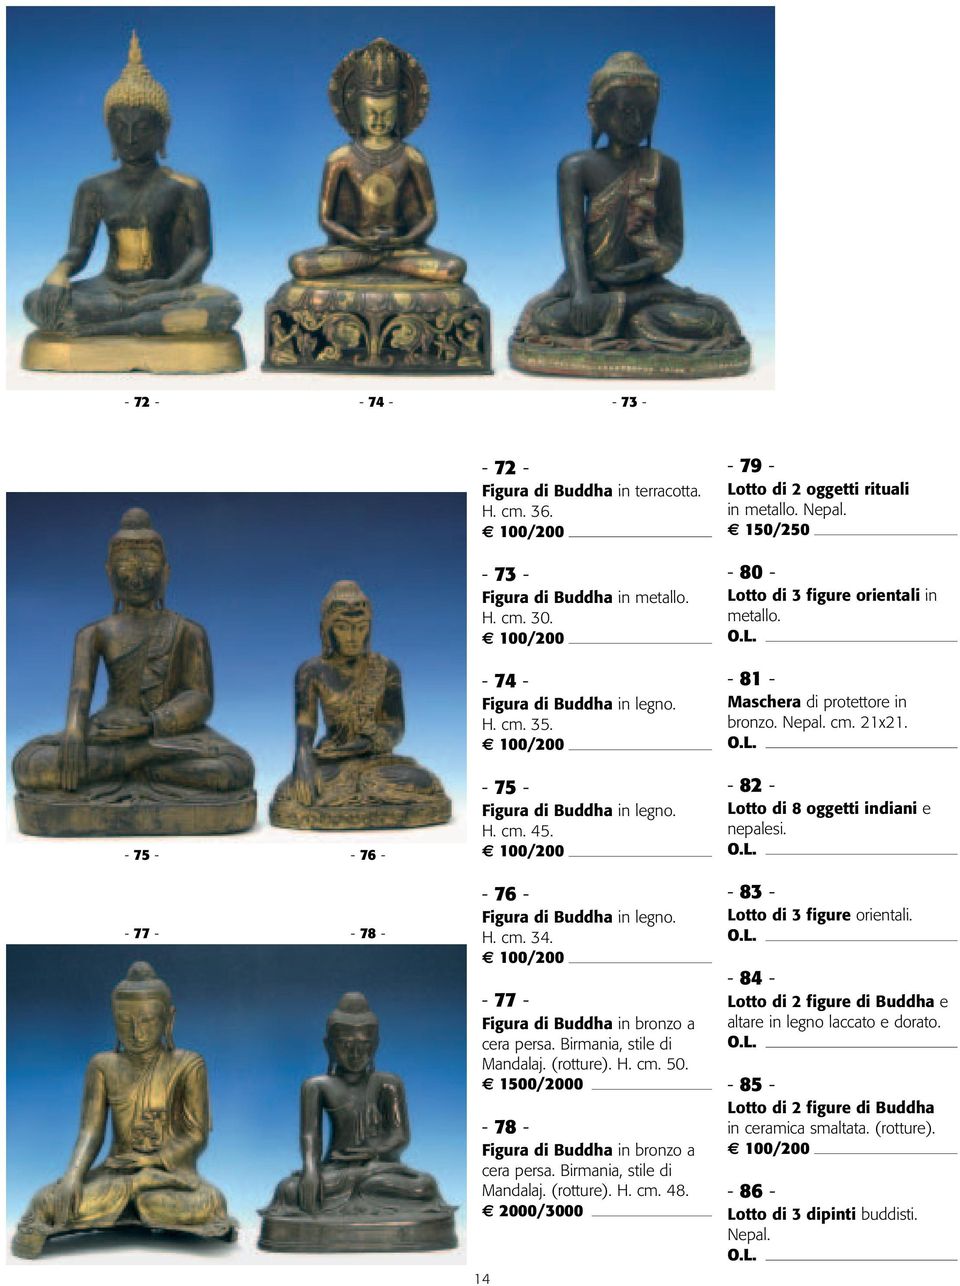 - 82 - Lotto di 8 oggetti indiani e nepalesi. - 77 - - 78 - - 76 - Figura di Buddha in legno. H. cm. 34. - 77 - Figura di Buddha in bronzo a cera persa. Birmania, stile di Mandalaj. (rotture). H. cm. 50.